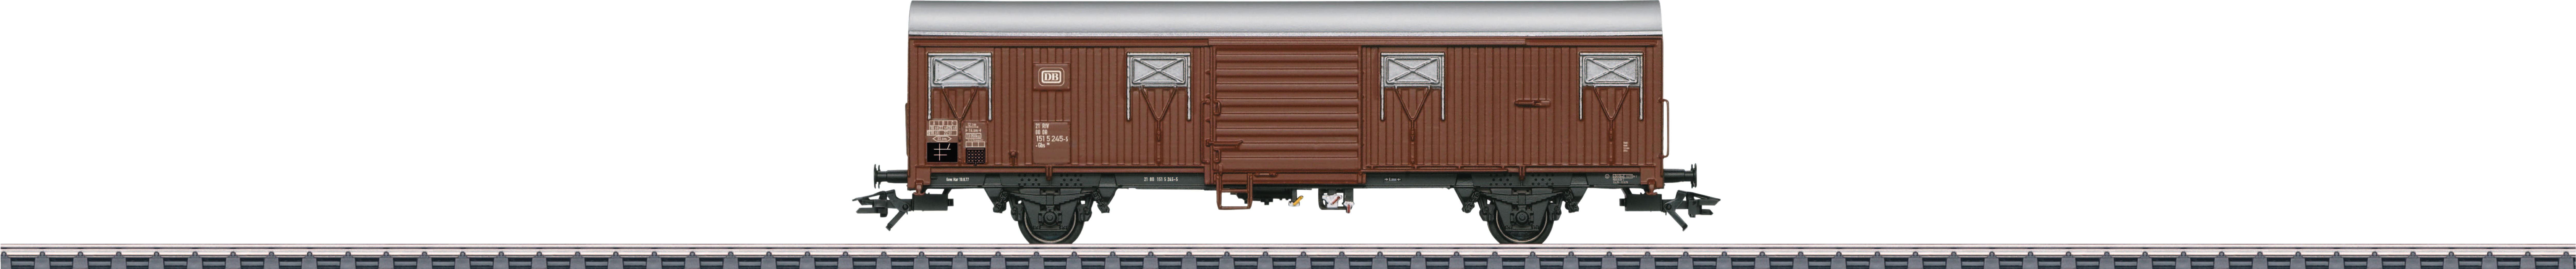 Märklin Güterwagen »Spundwandwagen Gbs 256 - 47311«, Made in Europe